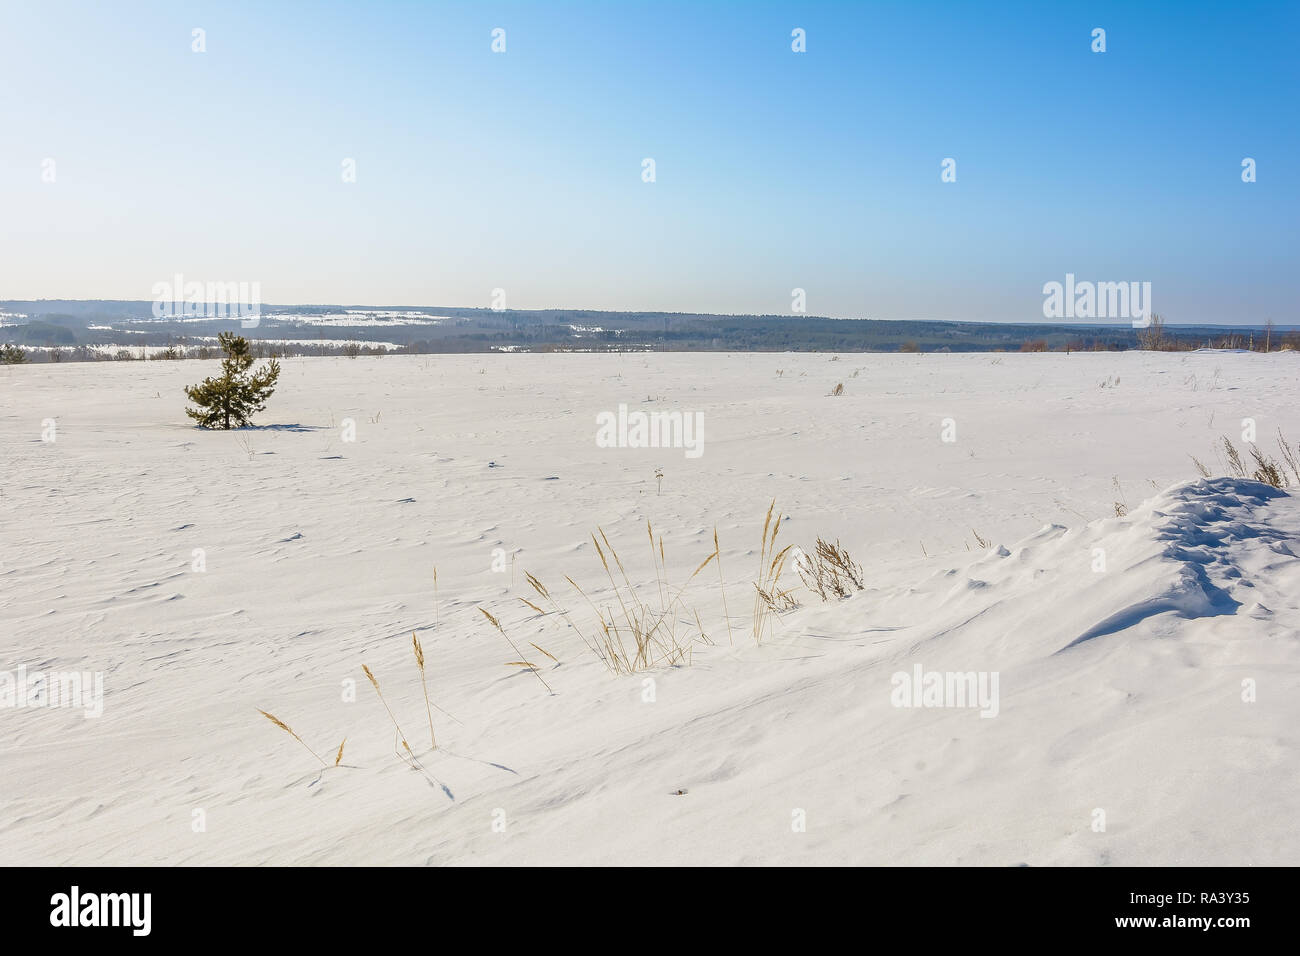 Lonely spruce in a snowy field in winter Stock Photo